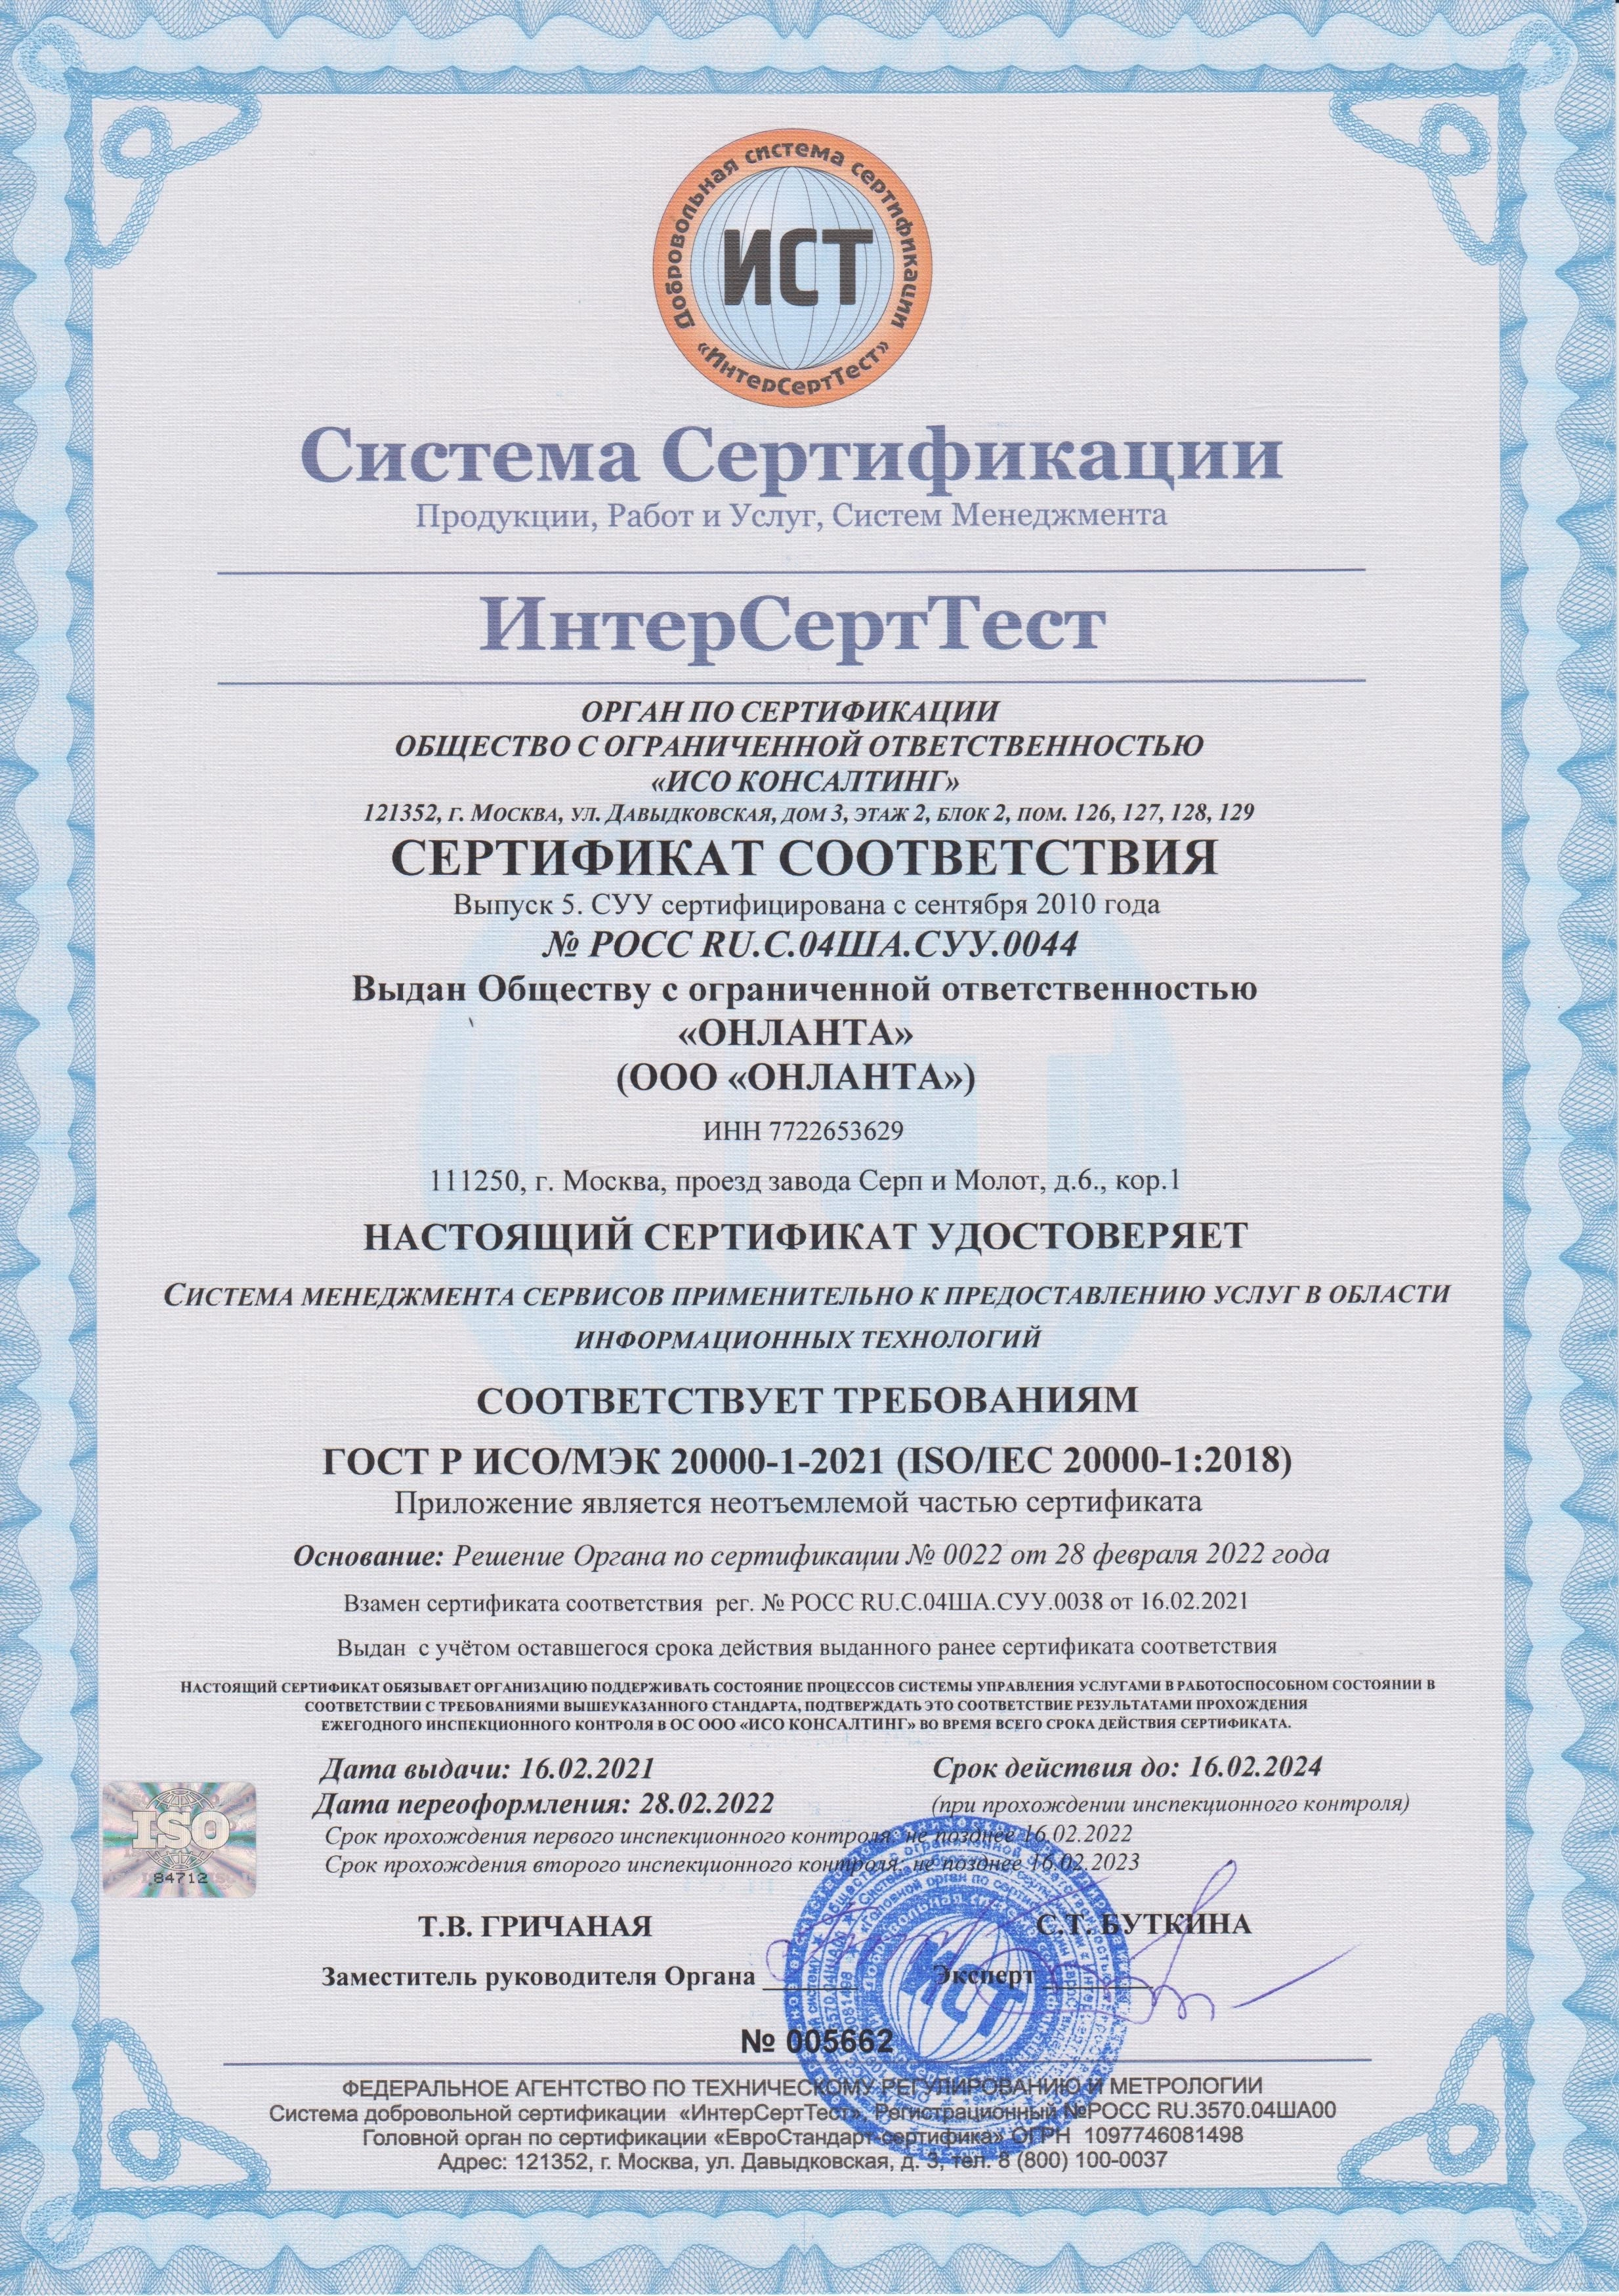 ISO/IEC 20000-1:2011